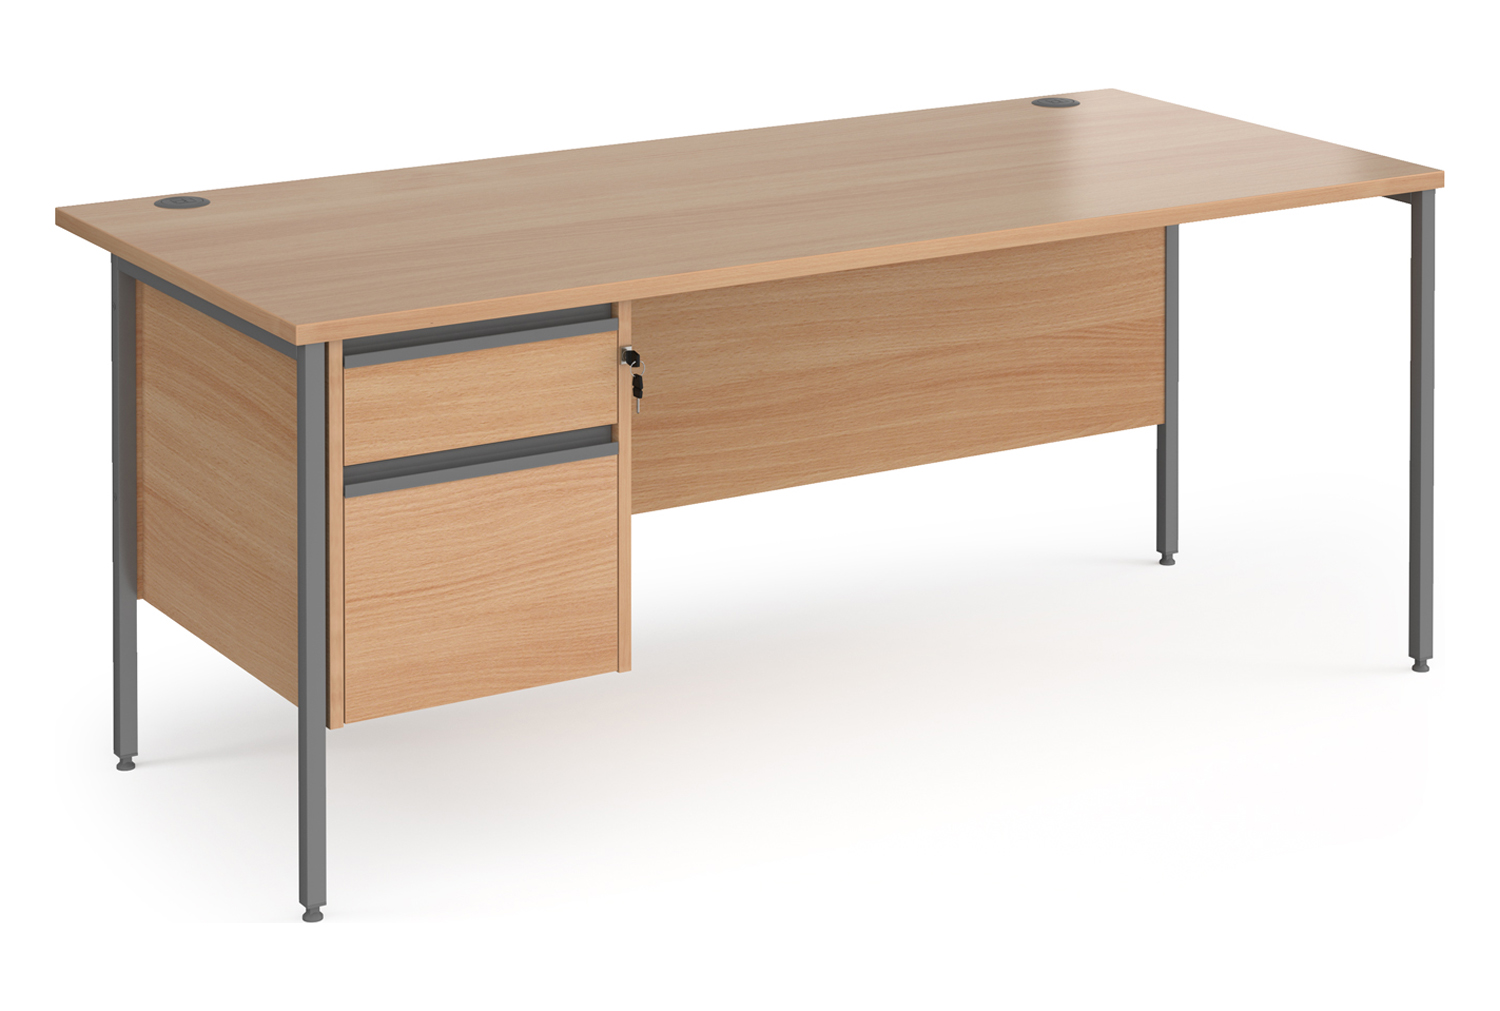 Value Line Classic+ Rectangular H-Leg Office Desk 2 Drawers (Graphite Leg), 180wx80dx73h (cm), Beech, Express Delivery